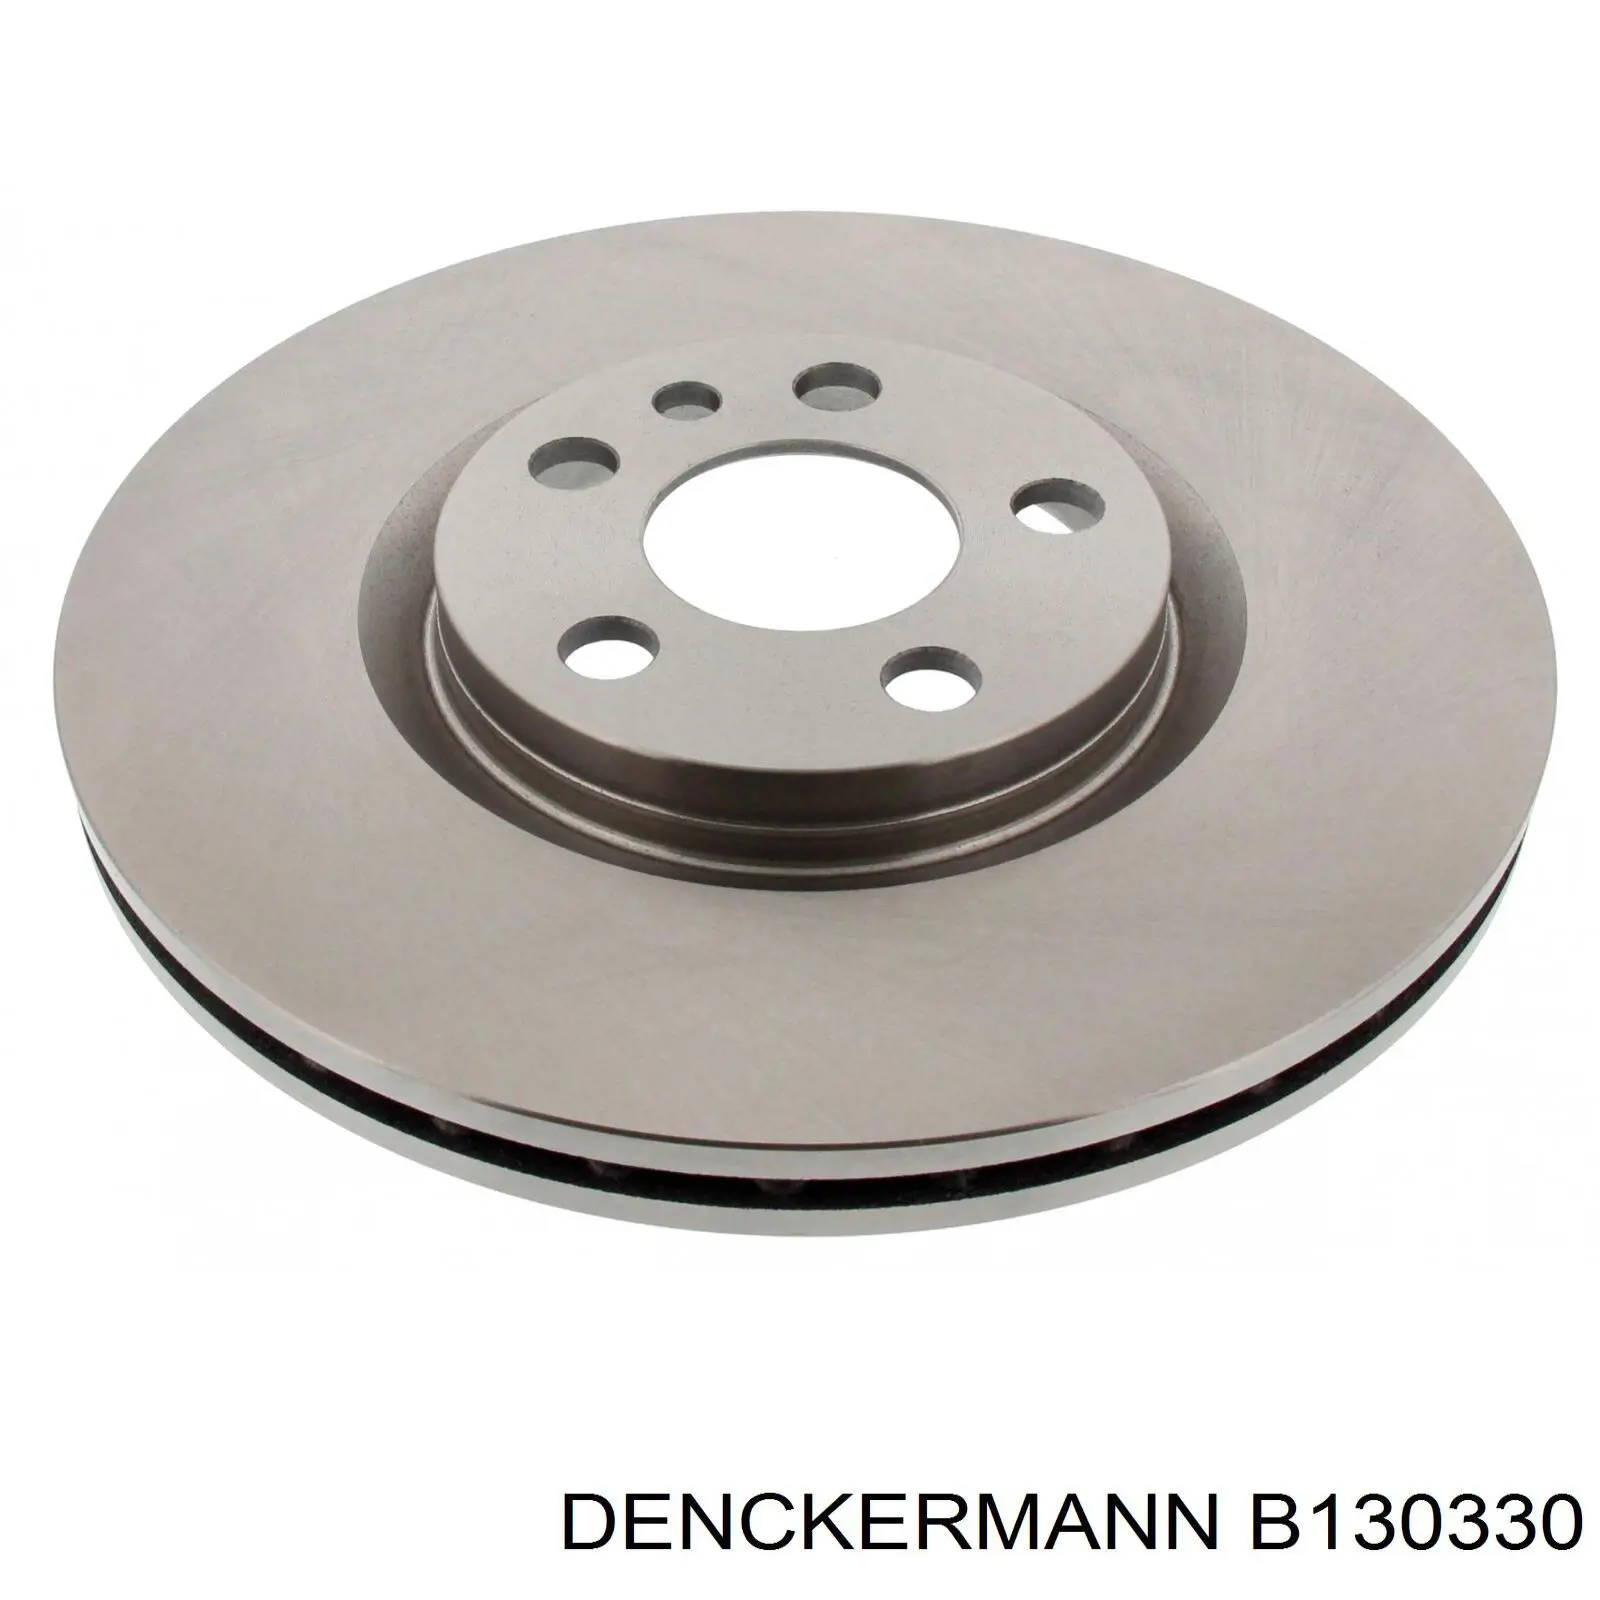 B130330 Denckermann disco do freio dianteiro